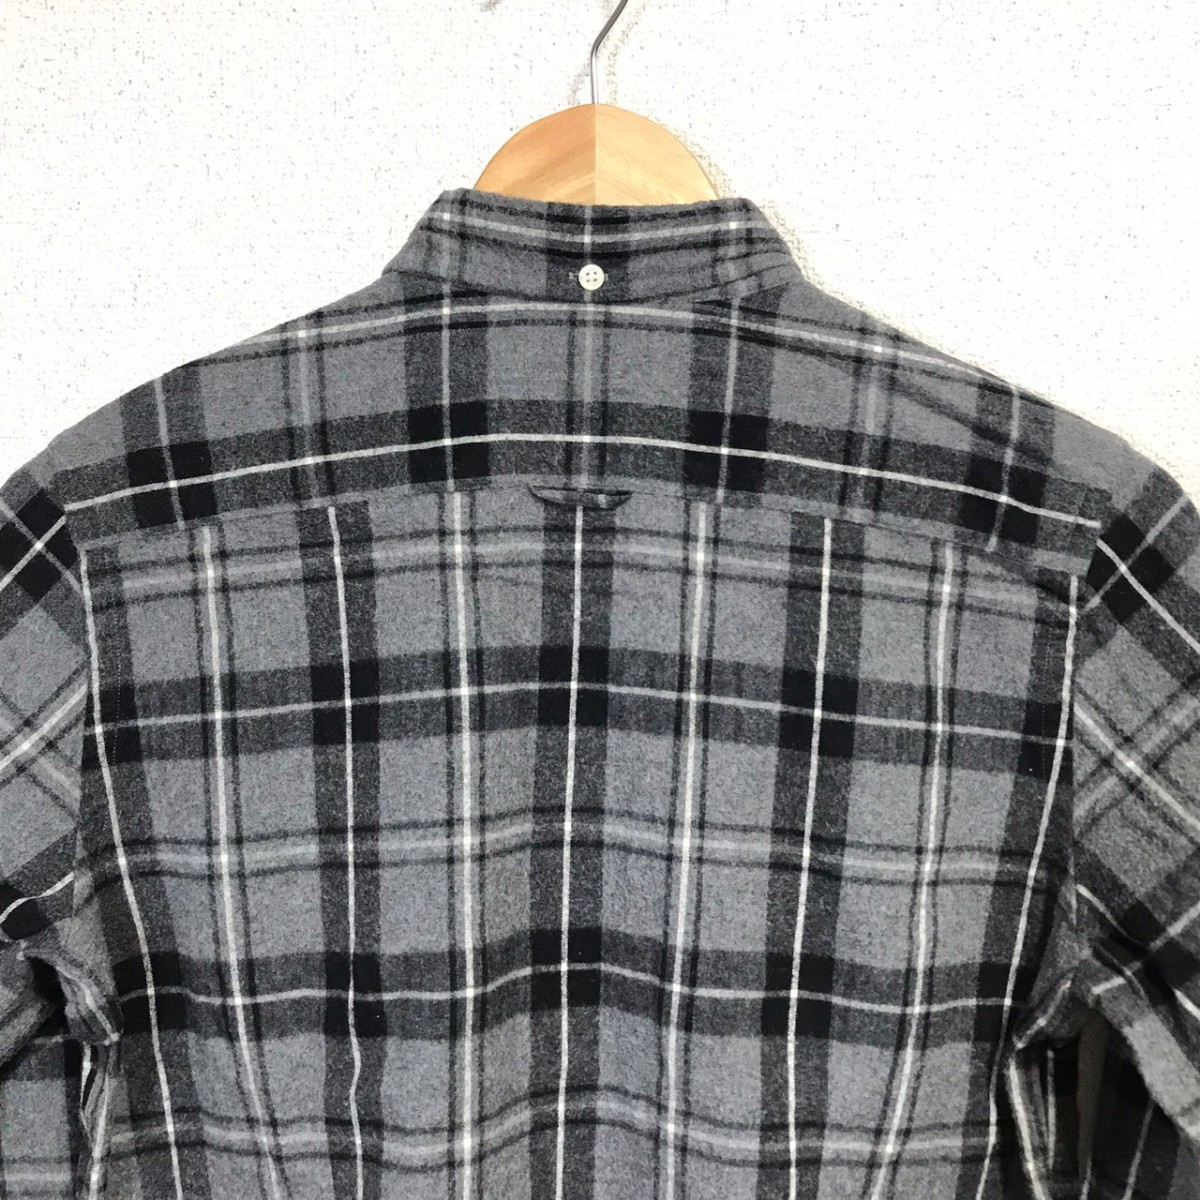 H5428dL 日本製 Gymphlex ジムフレックス サイズ14 (S～M位) 長袖シャツ チェックシャツ ネルシャツ グレー×ブラック 綿100% レディース_画像5